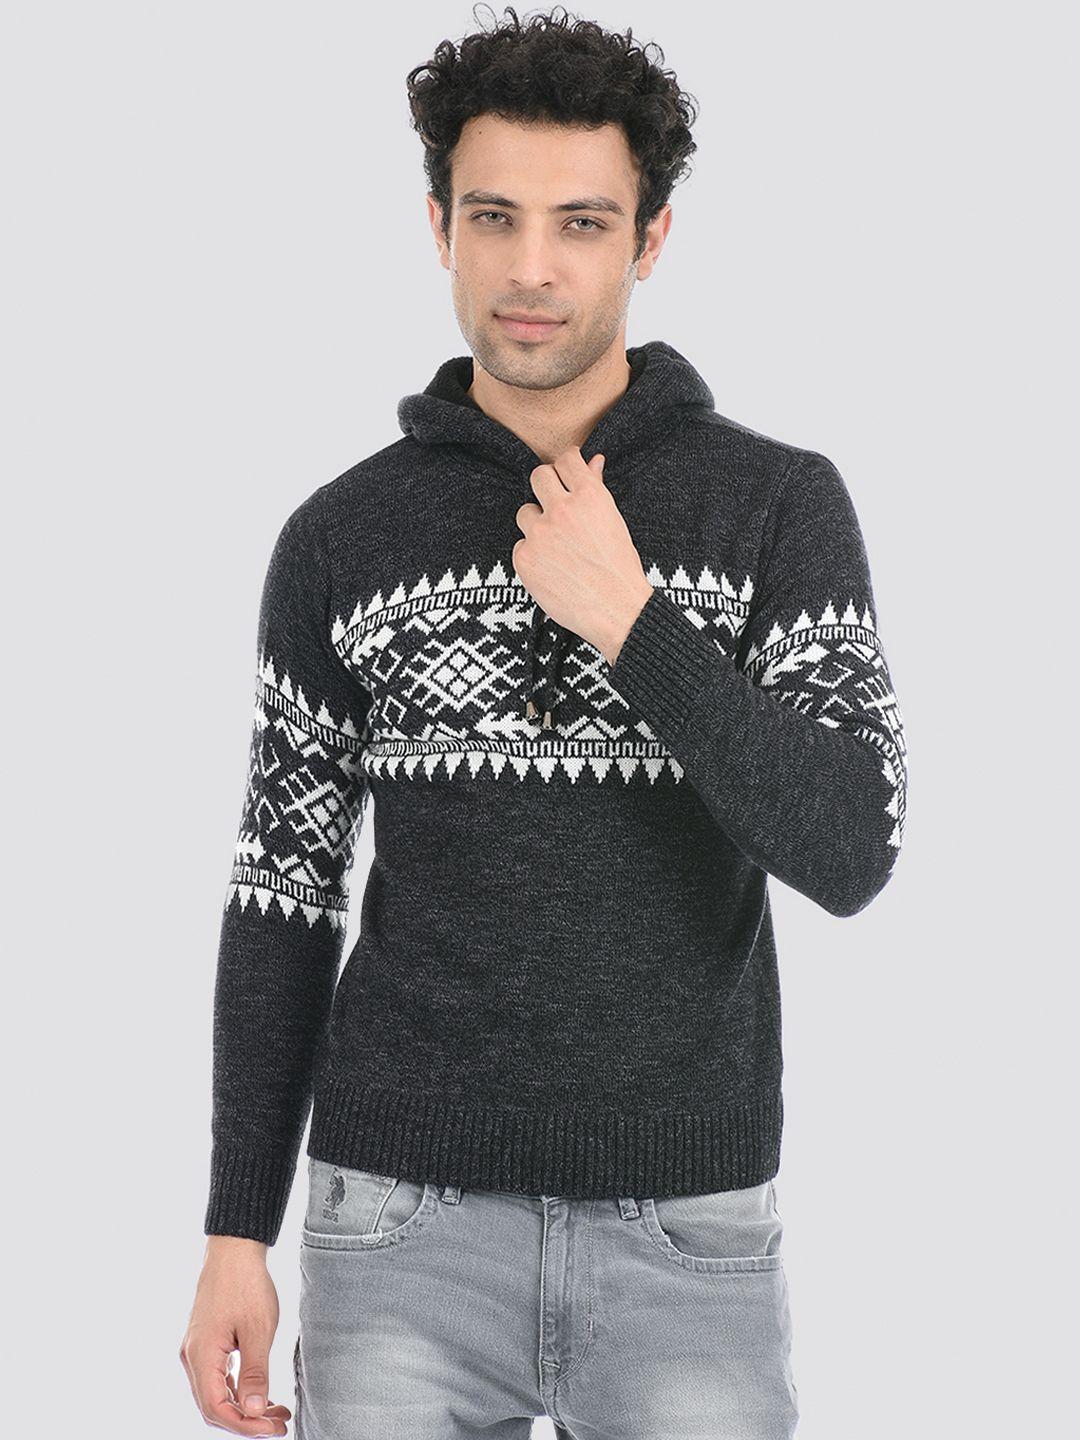 cloak & decker by monte carlo men grey & white printed acrylic pullover sweater